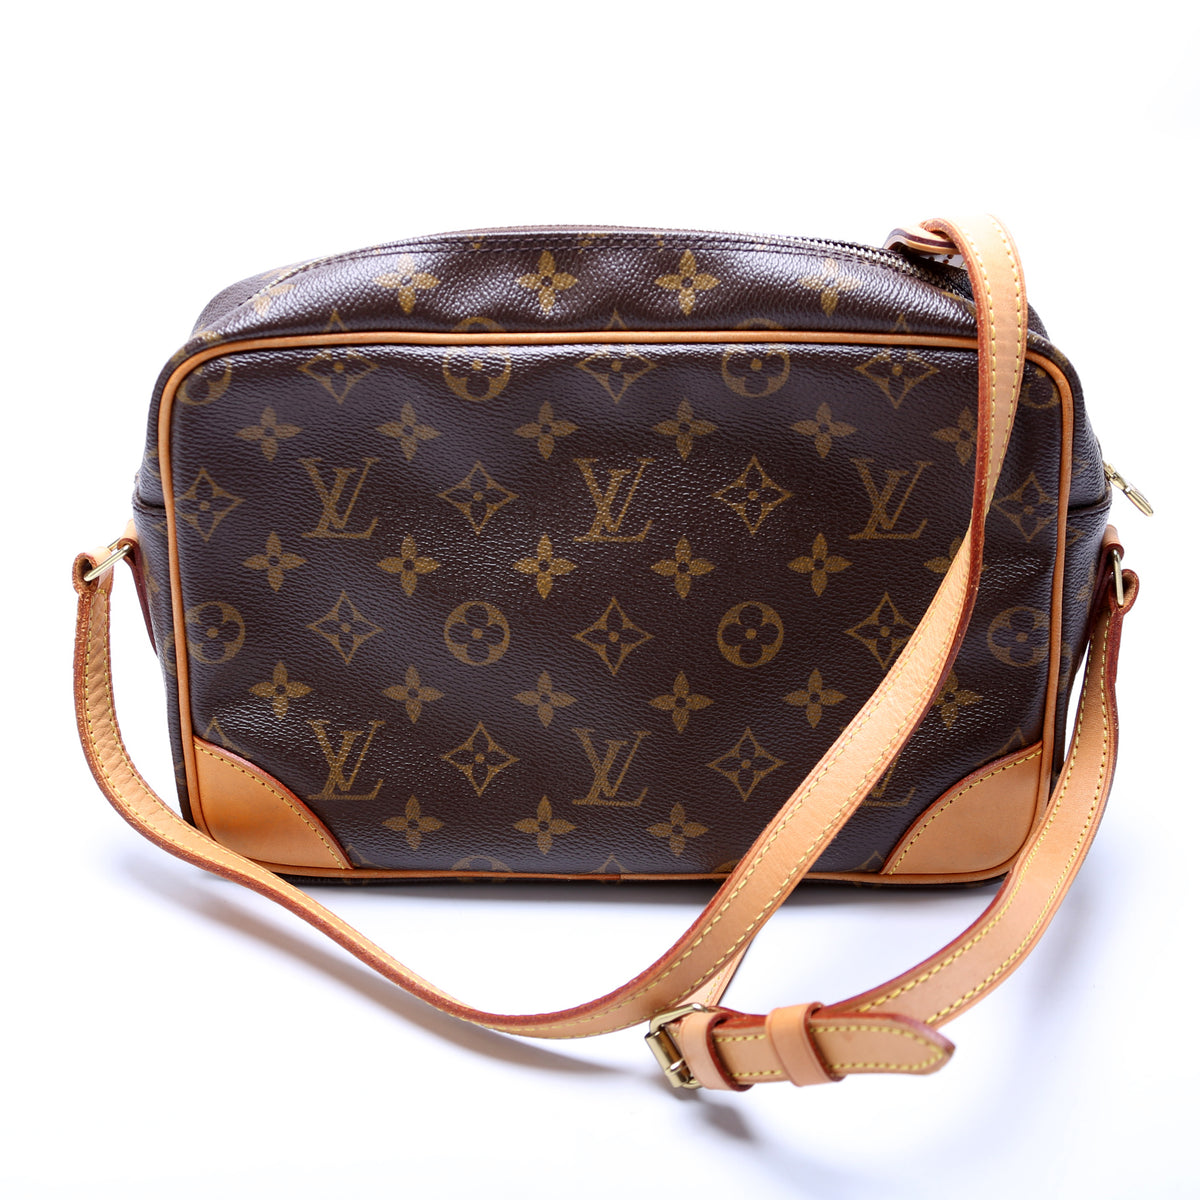 Louis+Vuitton+Trocadero+Shoulder+Bag+Red+Leather for sale online